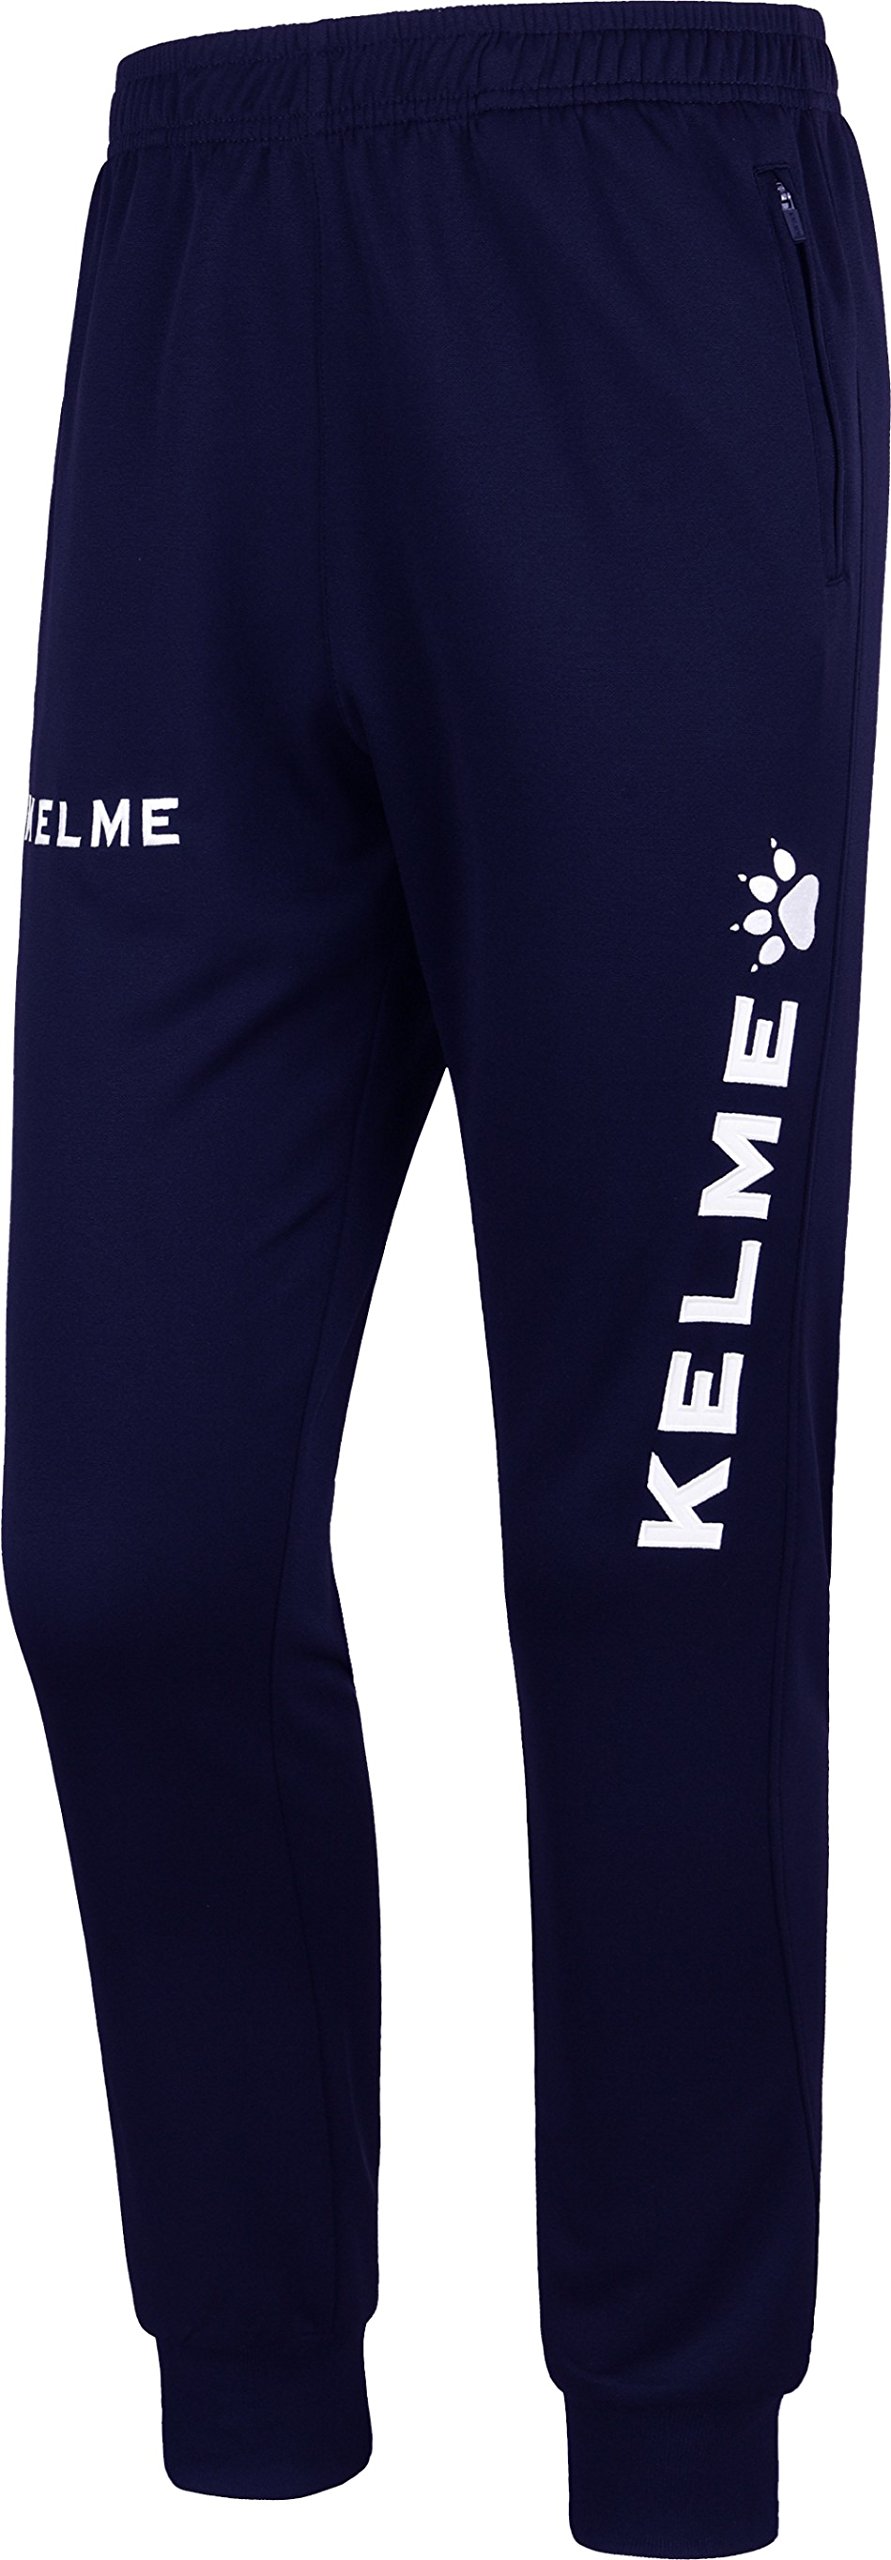 Kelme Jungen Global Lange Hose Jogginghose, Gr. XL (Etikettengröße: 12), marineblau / weiß